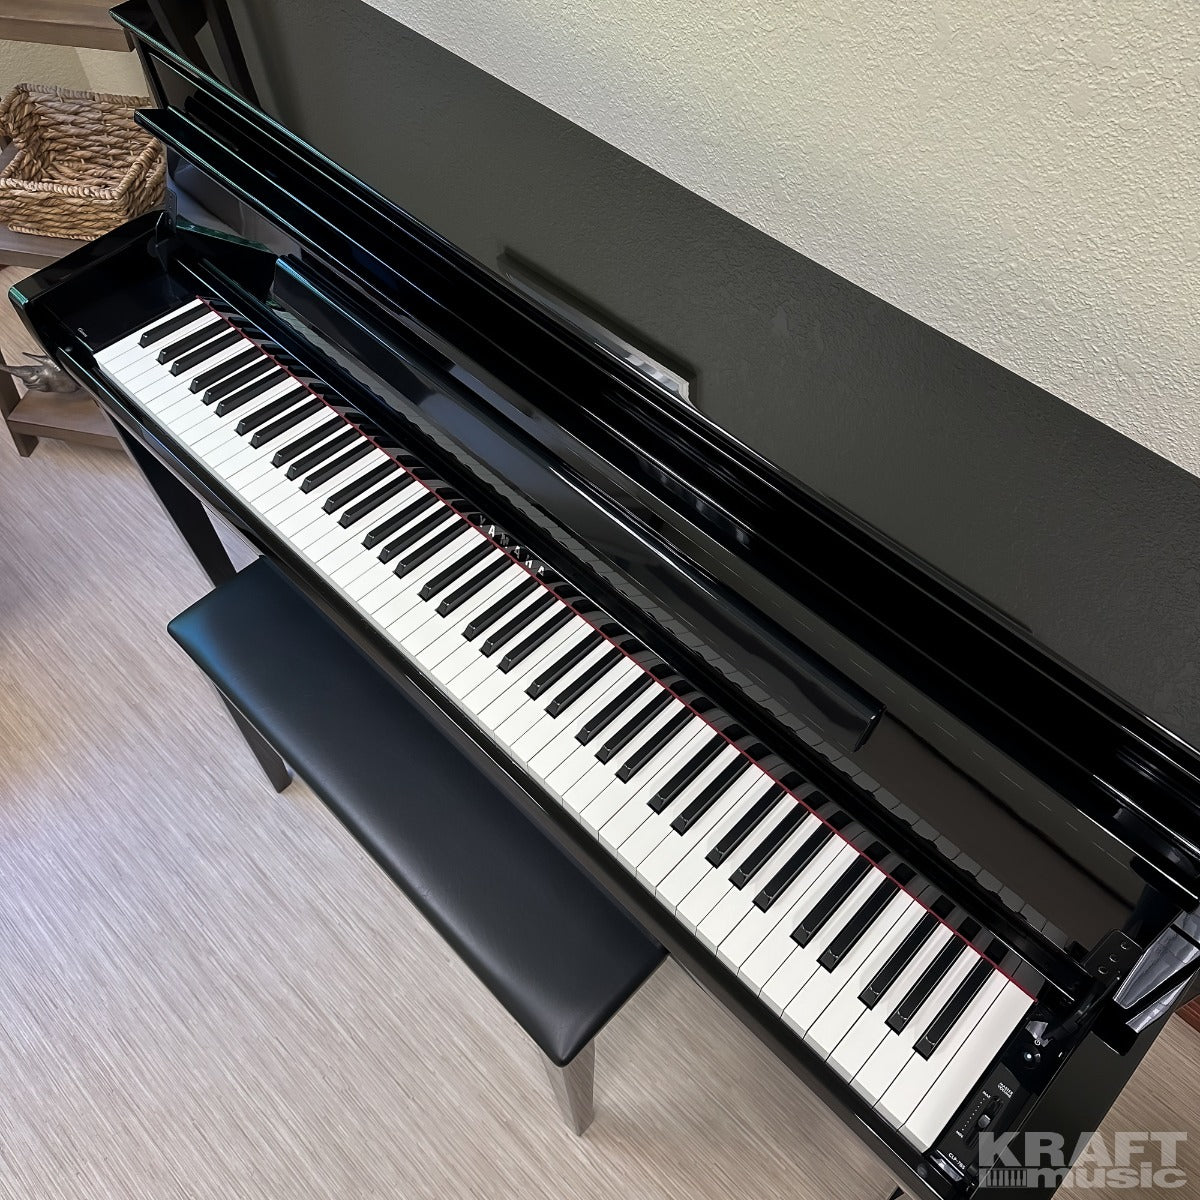 Yamaha Clavinova CLP-785 Digital Piano - Polished Ebony - Top View